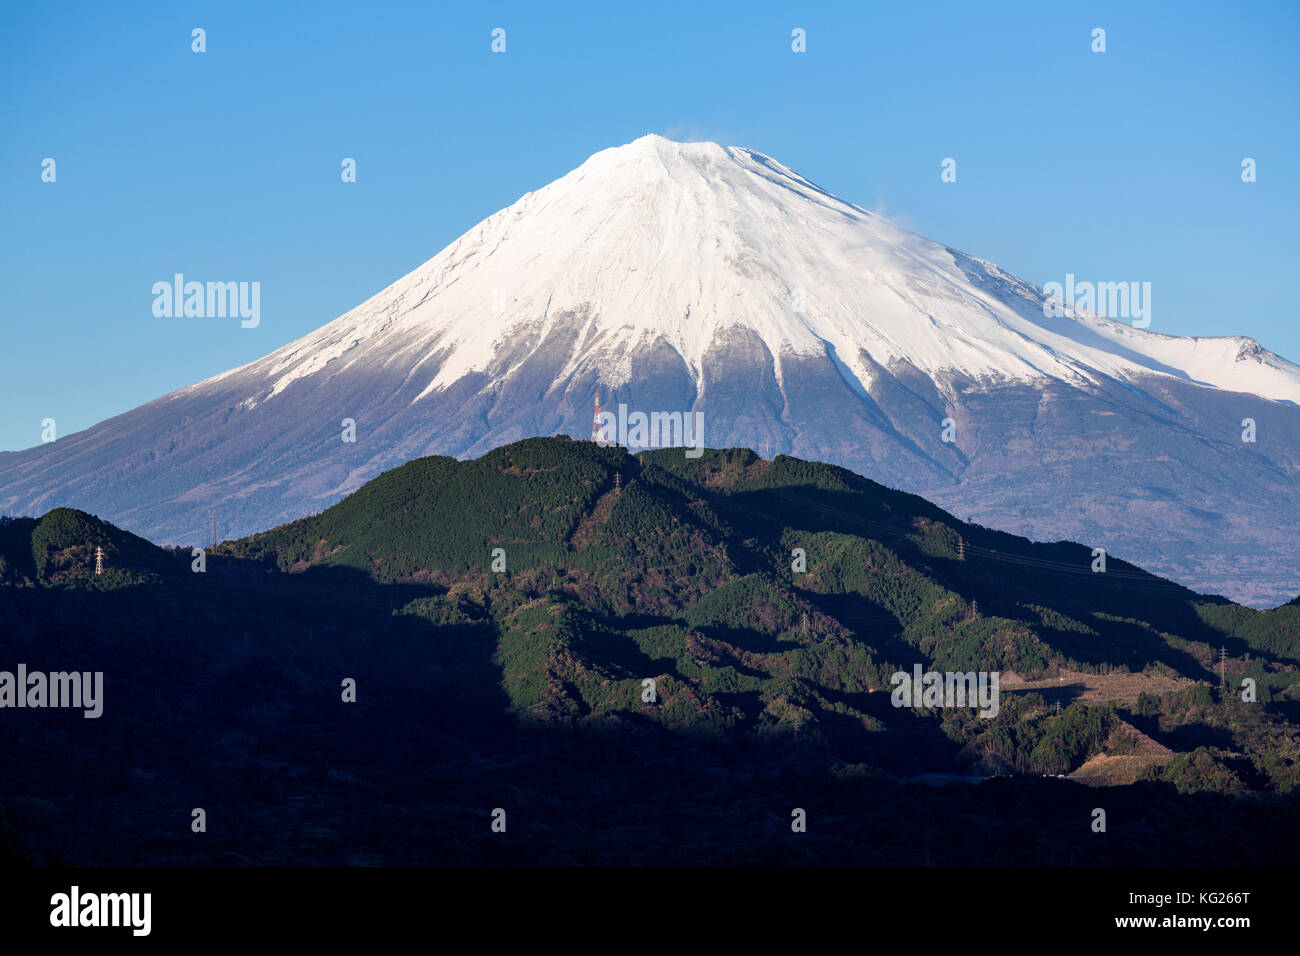 Le Mont Fuji, UNESCO World Heritage site, fuji-hakone-izu parc national, Shizuoka, Honshu, Japon, Asie Banque D'Images